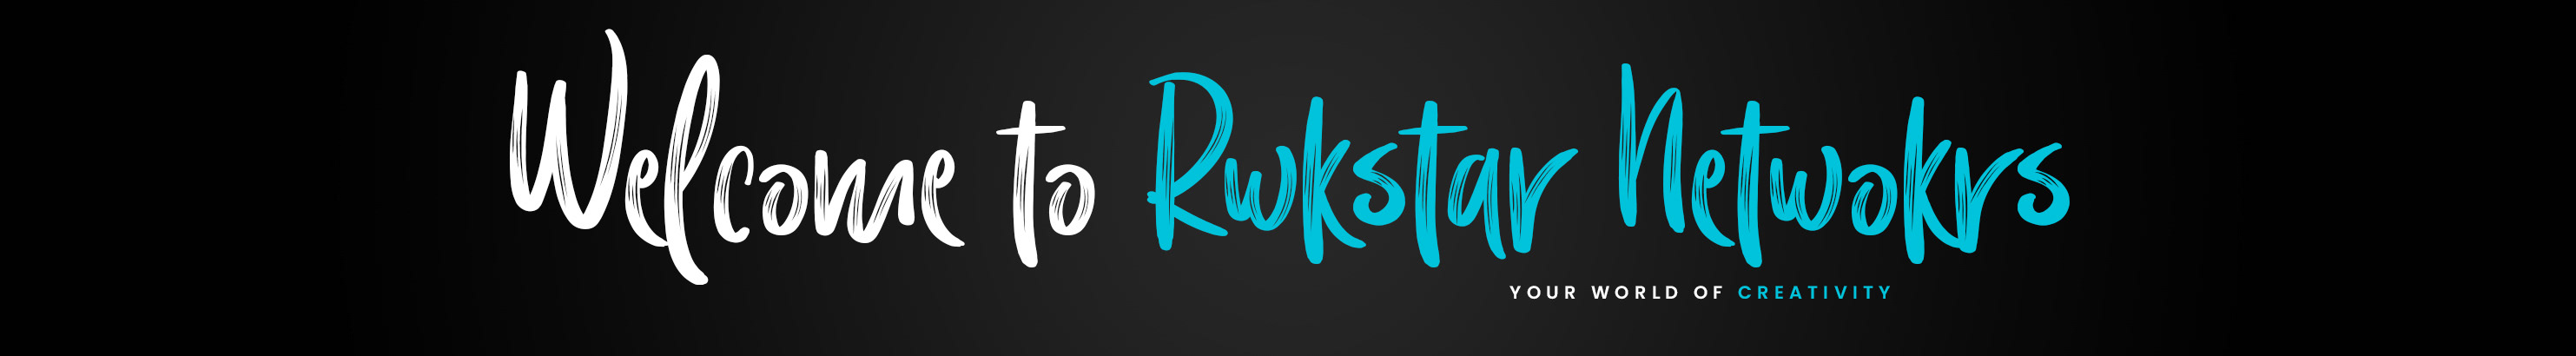 Rwkstar Networks 的个人资料横幅